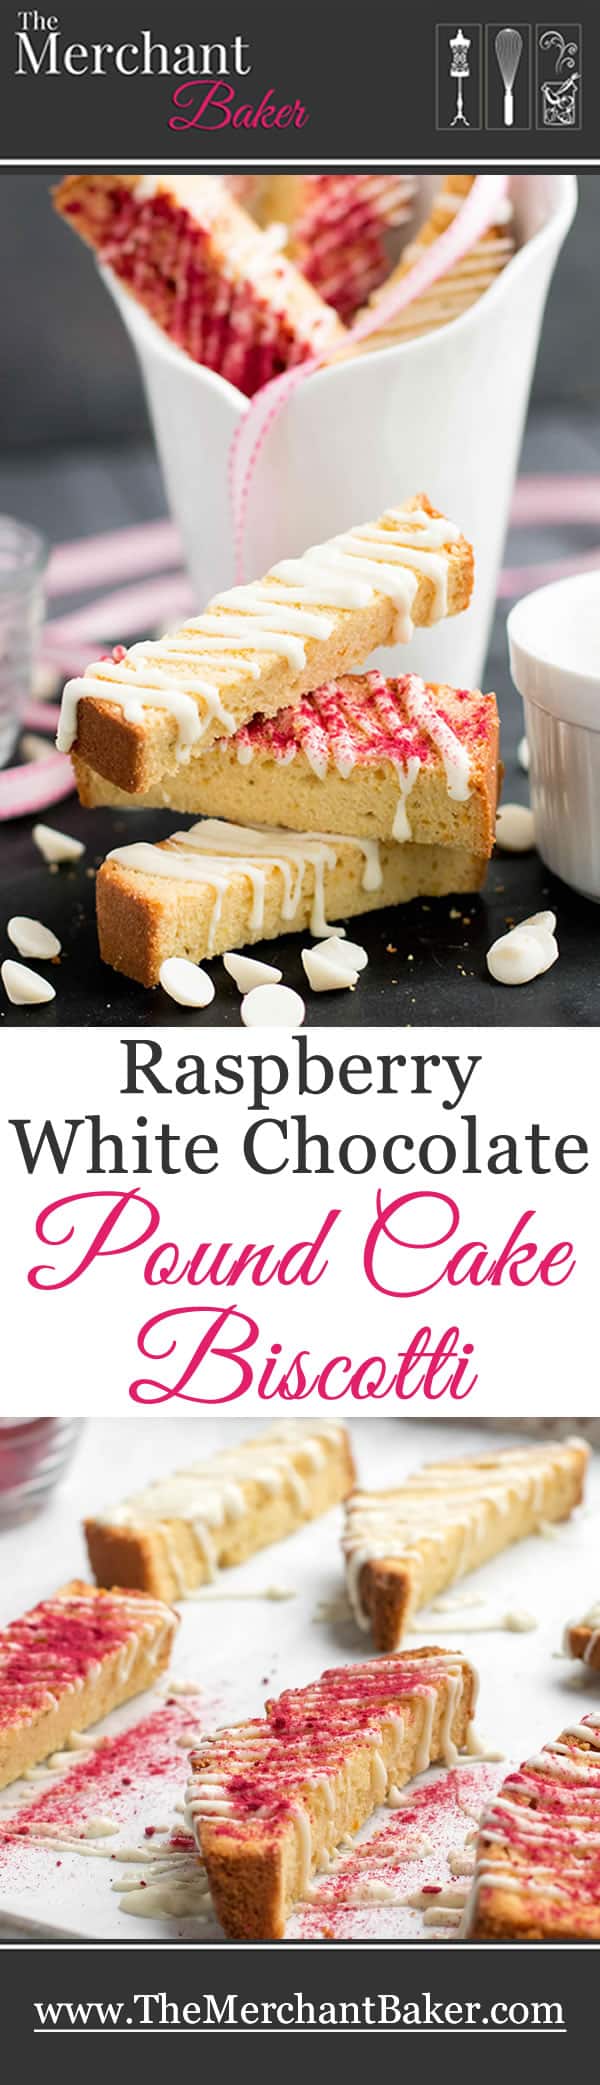 Raspberry White Chocolate Pound Cake Biscotti